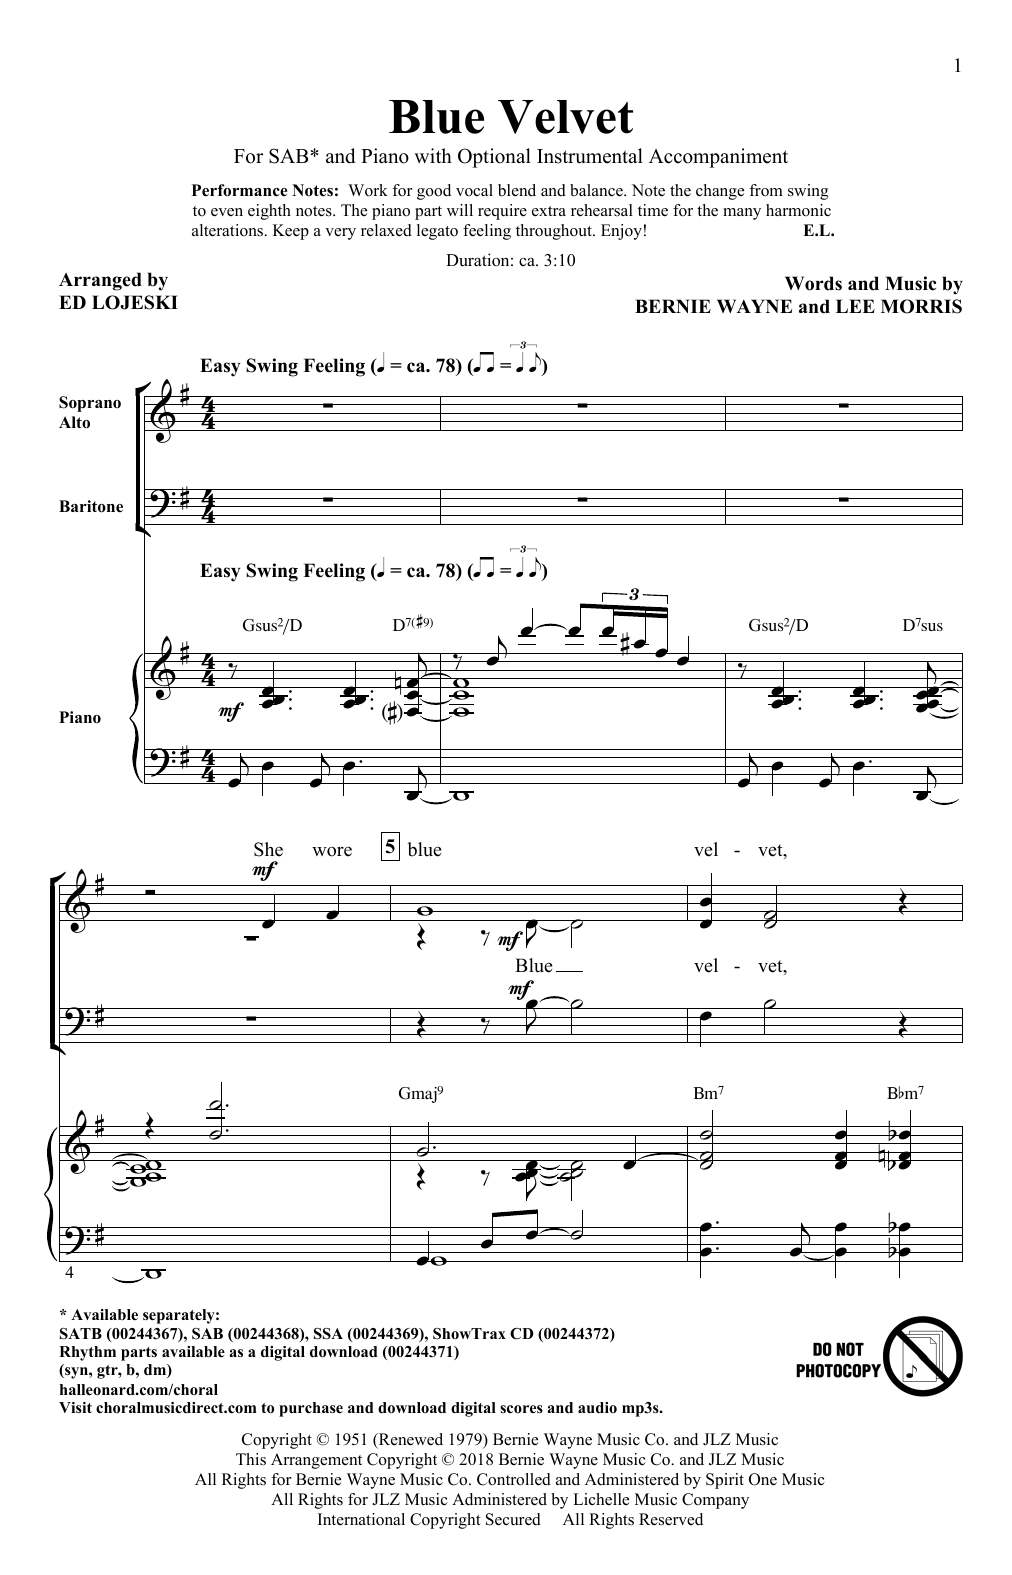 Ed Lojeski Blue Velvet Sheet Music Notes & Chords for SATB - Download or Print PDF